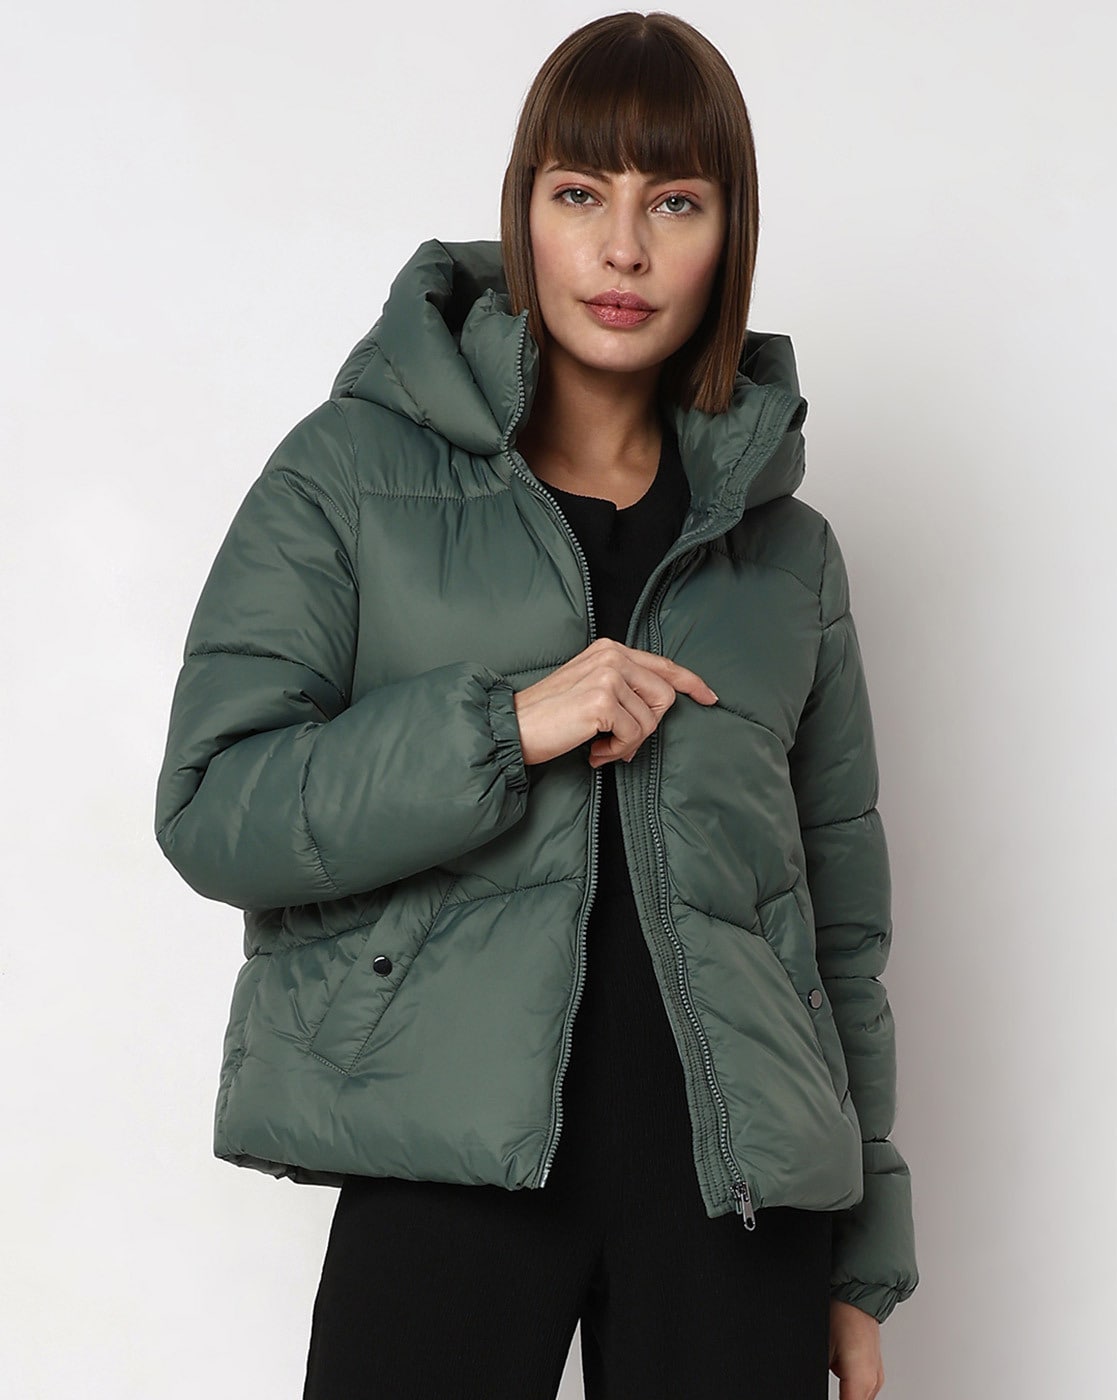 Shop for Vero Moda | Coats & Jackets | Womens | online at Lookagain